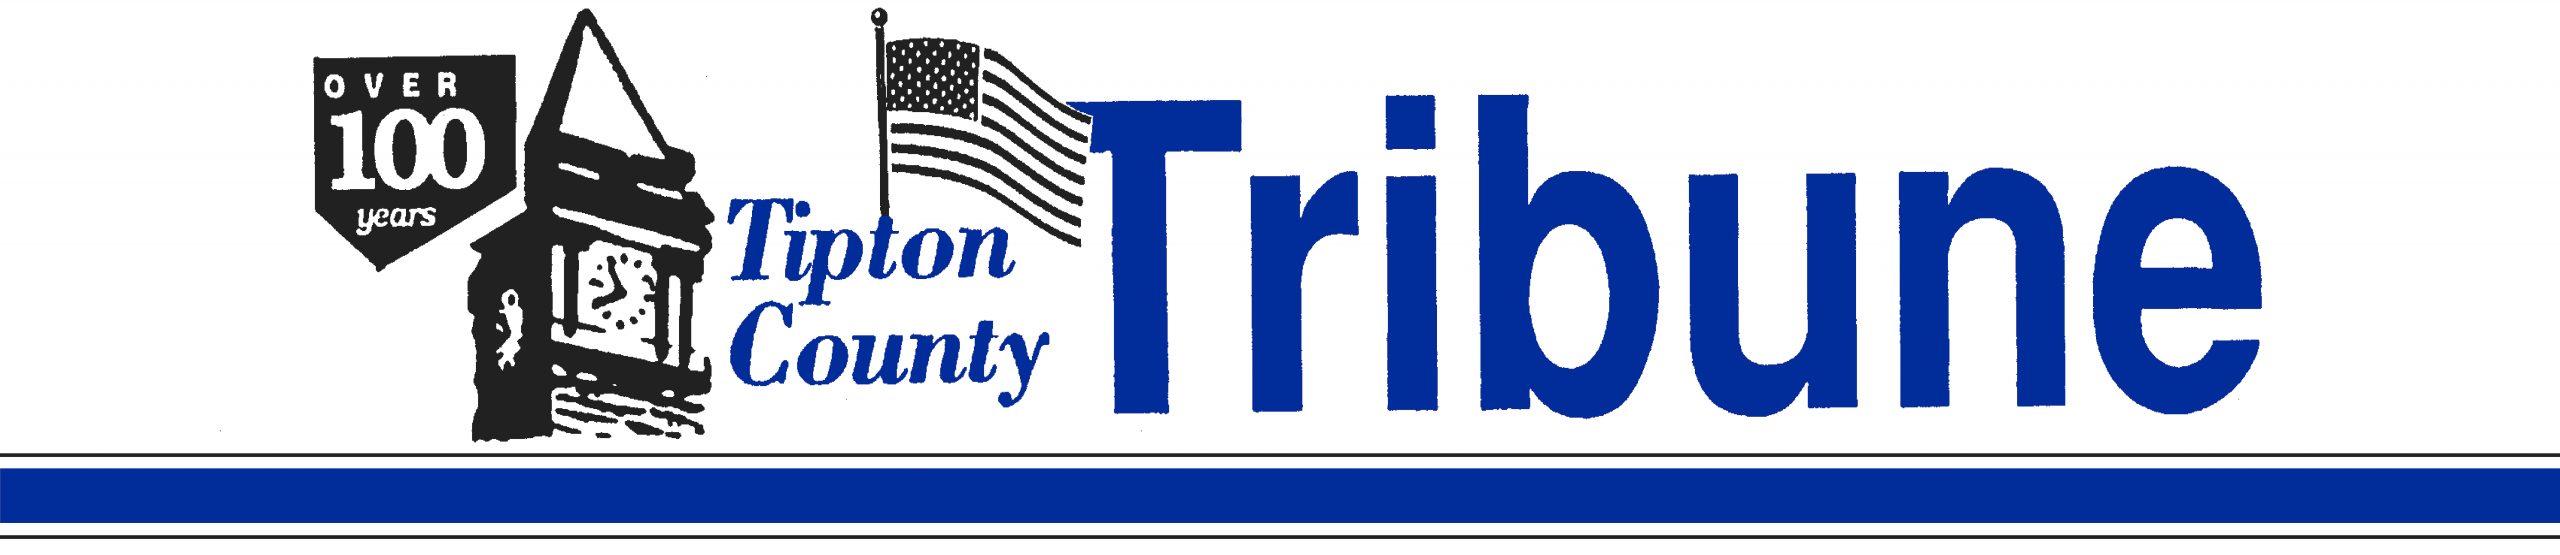 Tipton County Tribune